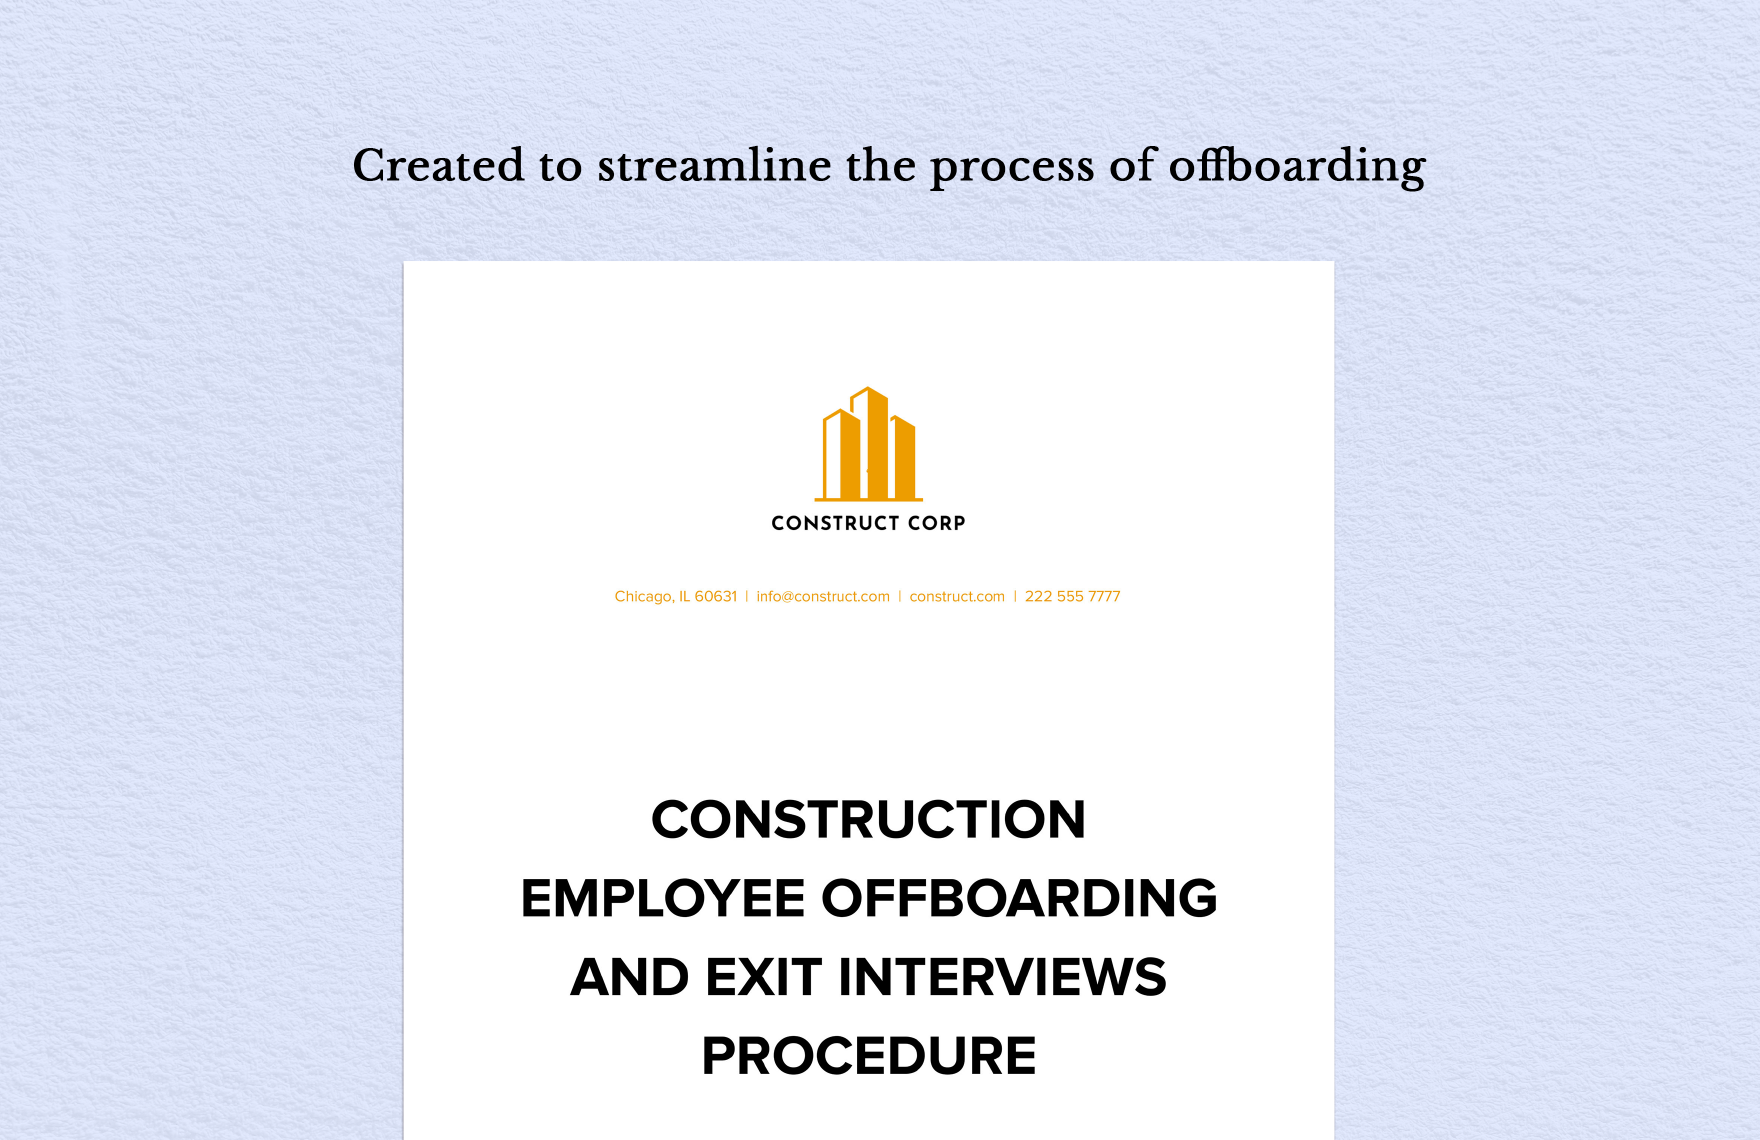 Construction Employee Offboarding and Exit Interviews Procedure